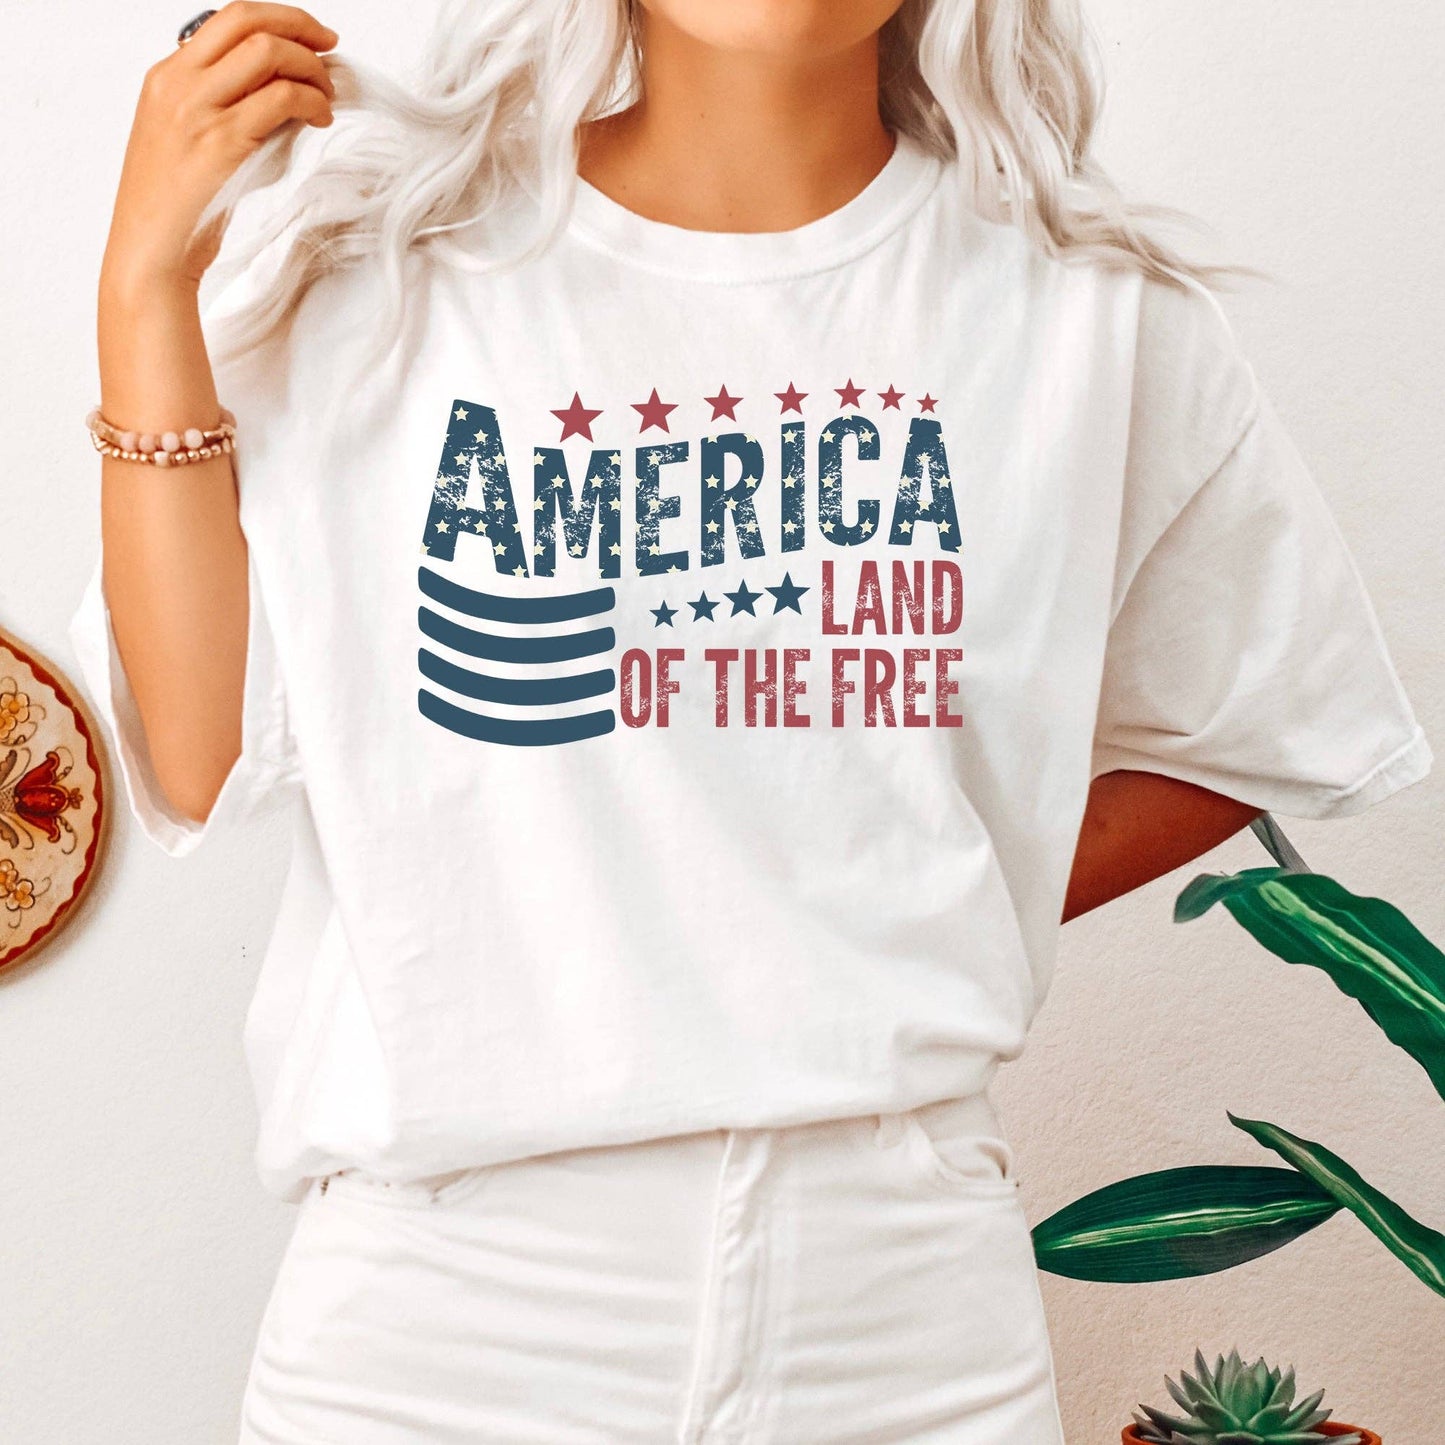 America, Flag, Land Of The Free, Patriotic, USA, Vintage, Comfort Colors Tshirt: Medium / Ivory Cream